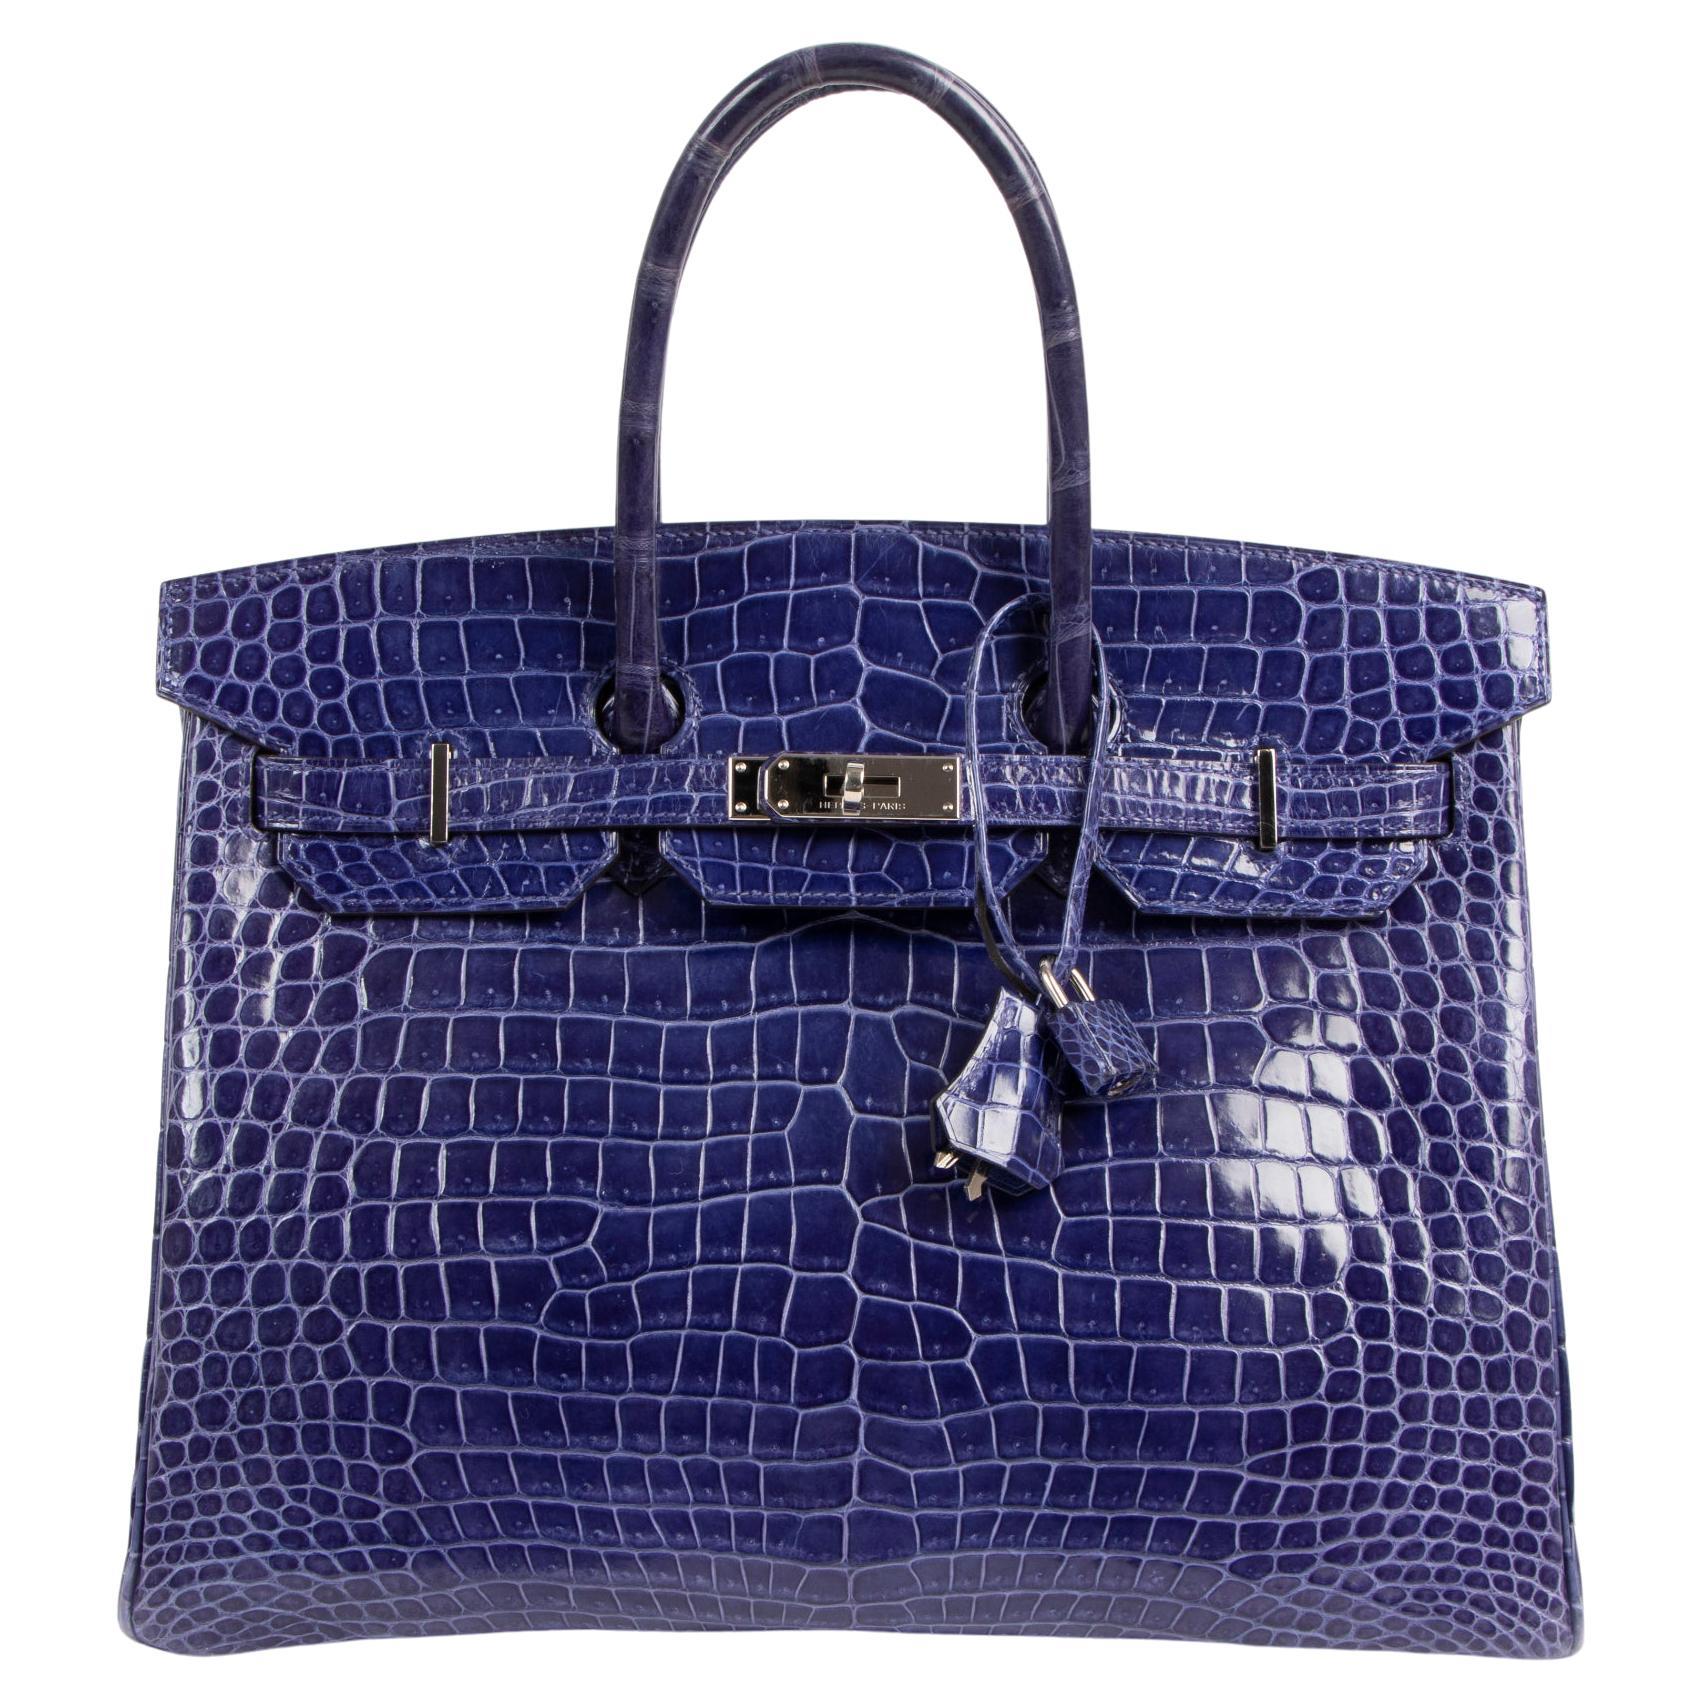 Hermes Birkin 35 Bag Vivid Electric Blue Porosus Crocodile